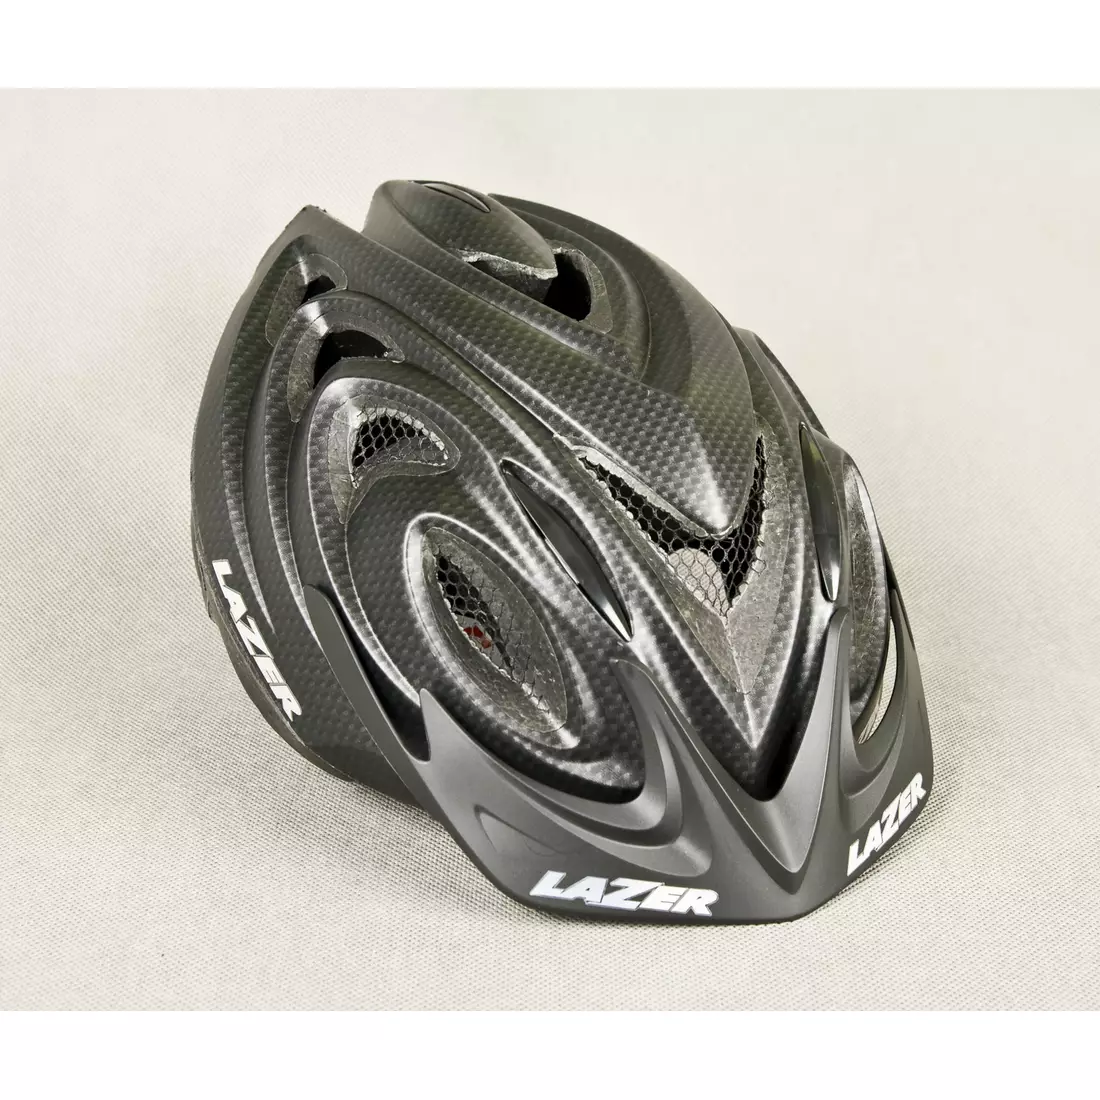 LAZER - 2X3M MTB bicycle helmet, color: carbon matt